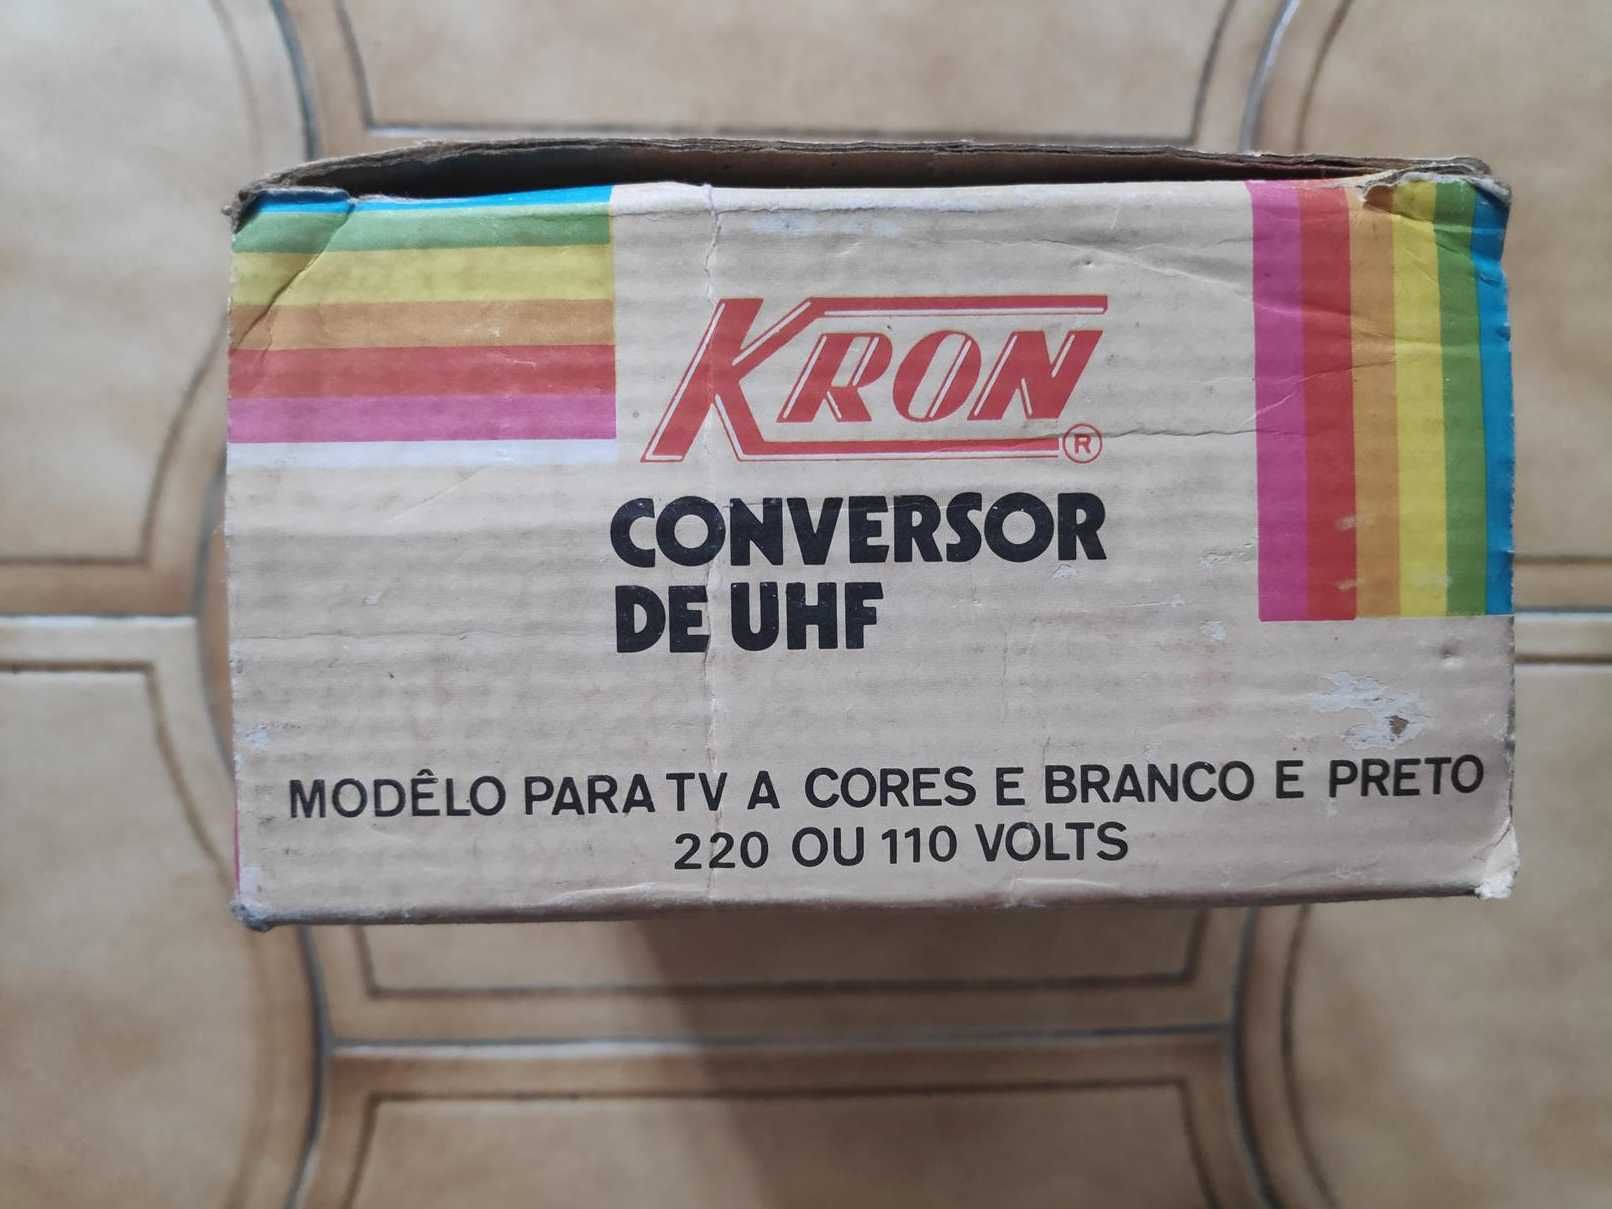 Conversor de UHF, da marca Kron